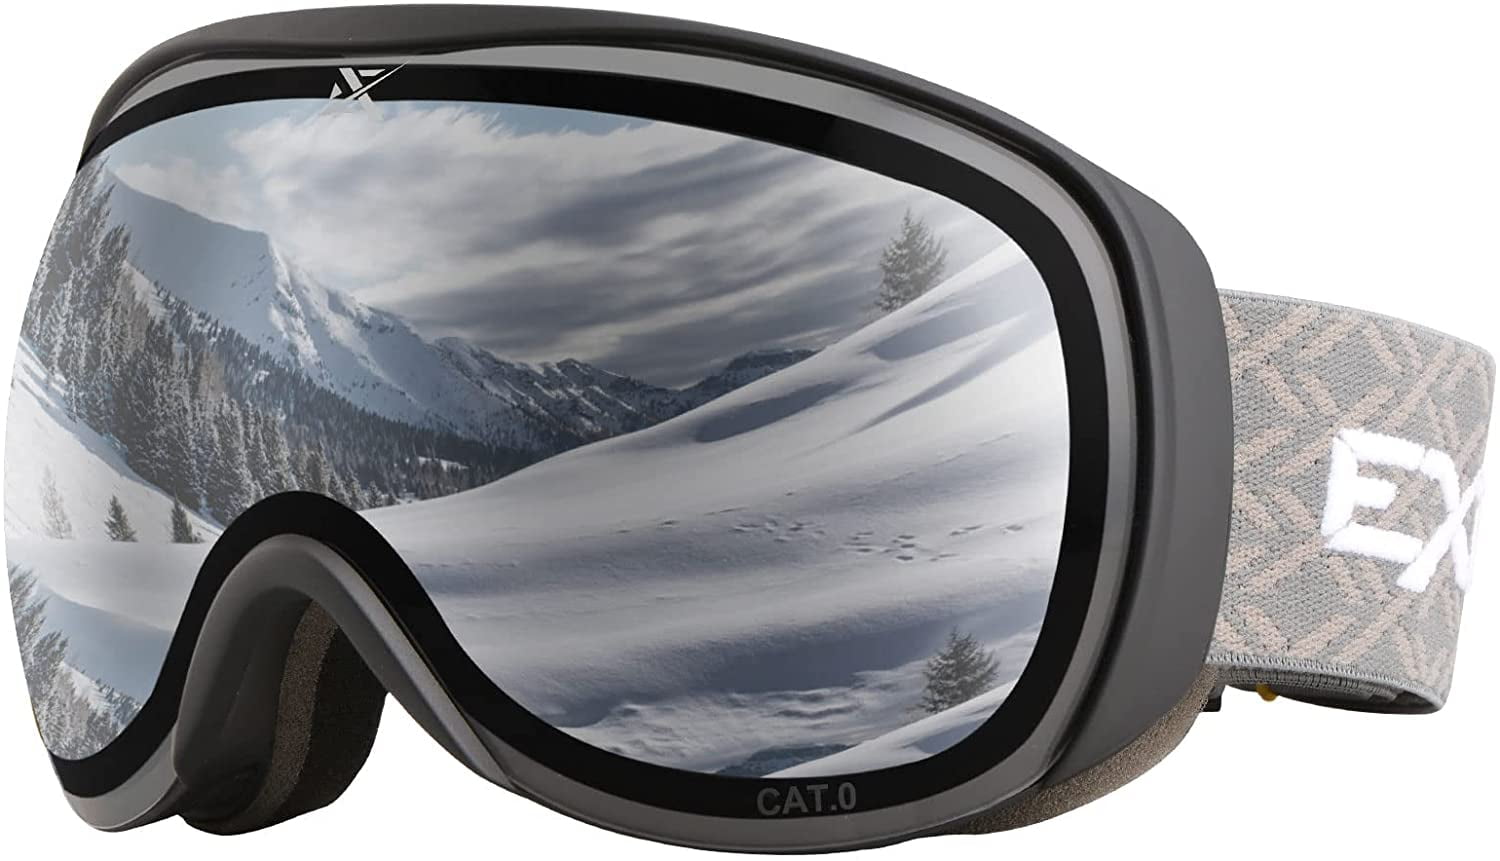 MilkRun Ski Goggles, Lightweight,Wide View,UV400 Protection,Helmet